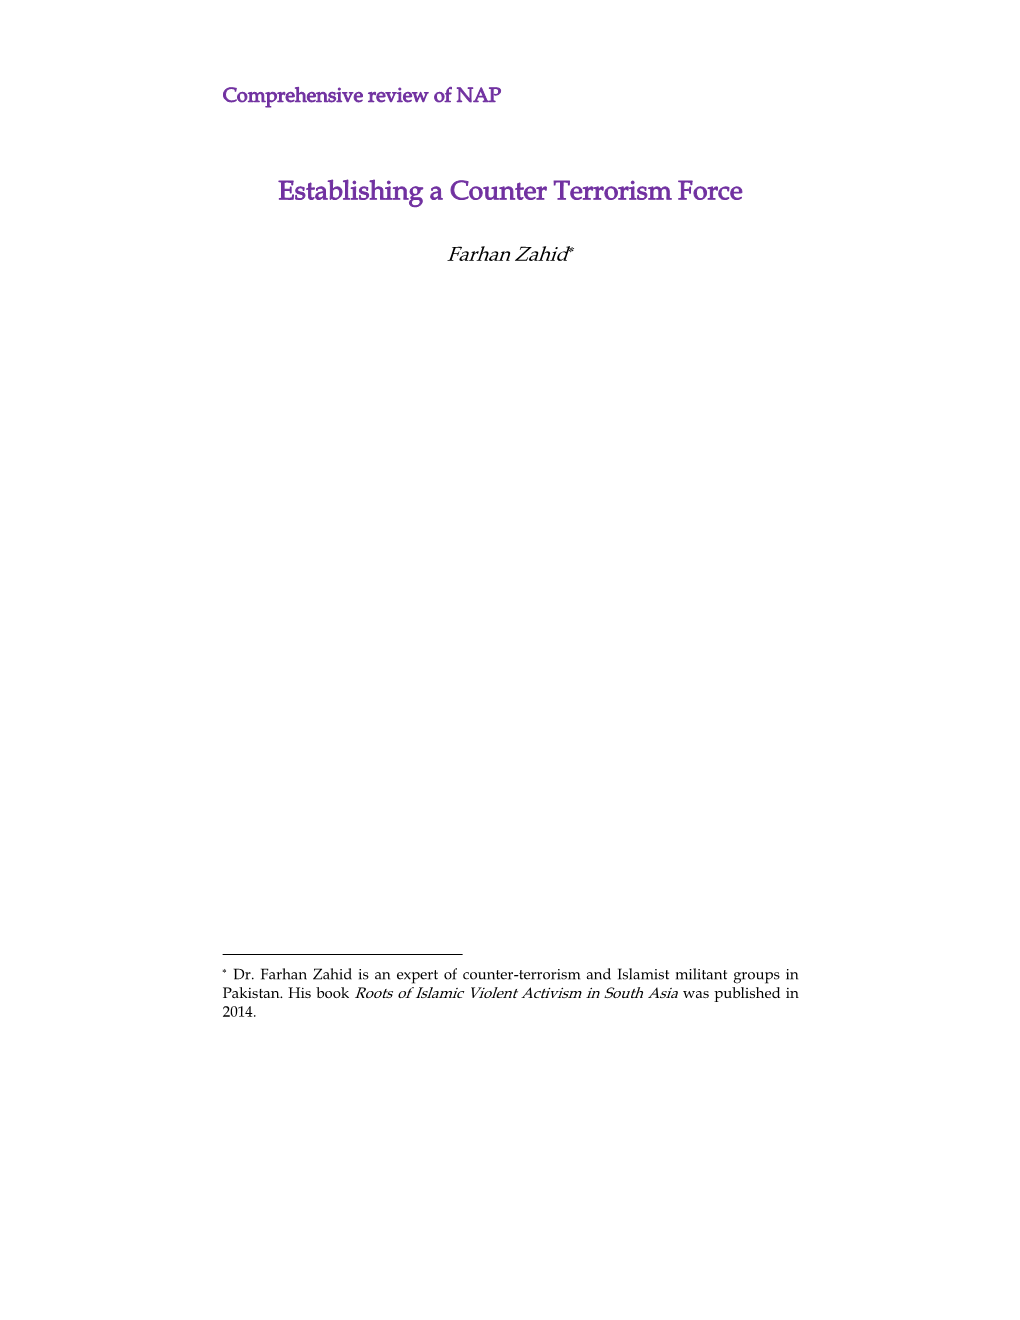 Establishing a Counter Terrorism Force